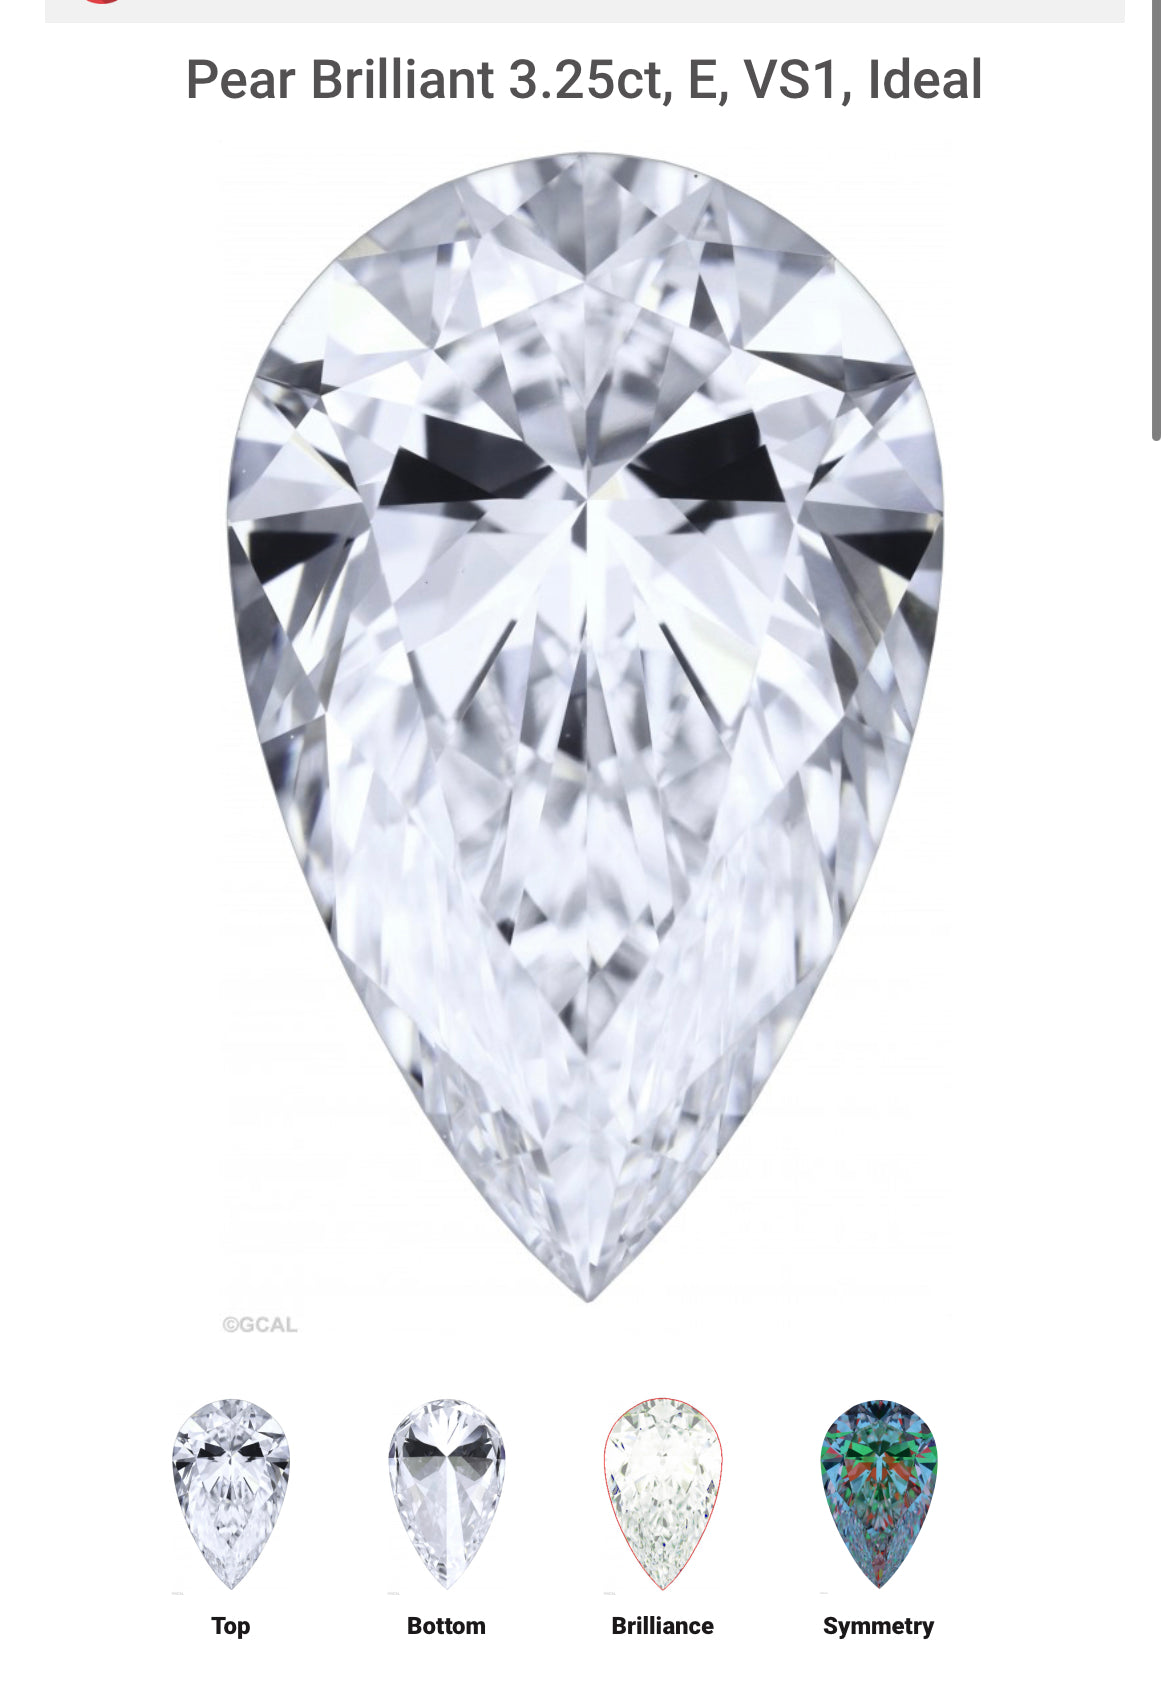 PEAR 3.25 Lab Grown Diamond , Color E , Clarity VS1 GCAL Certificat LG323490324 - IDEAL